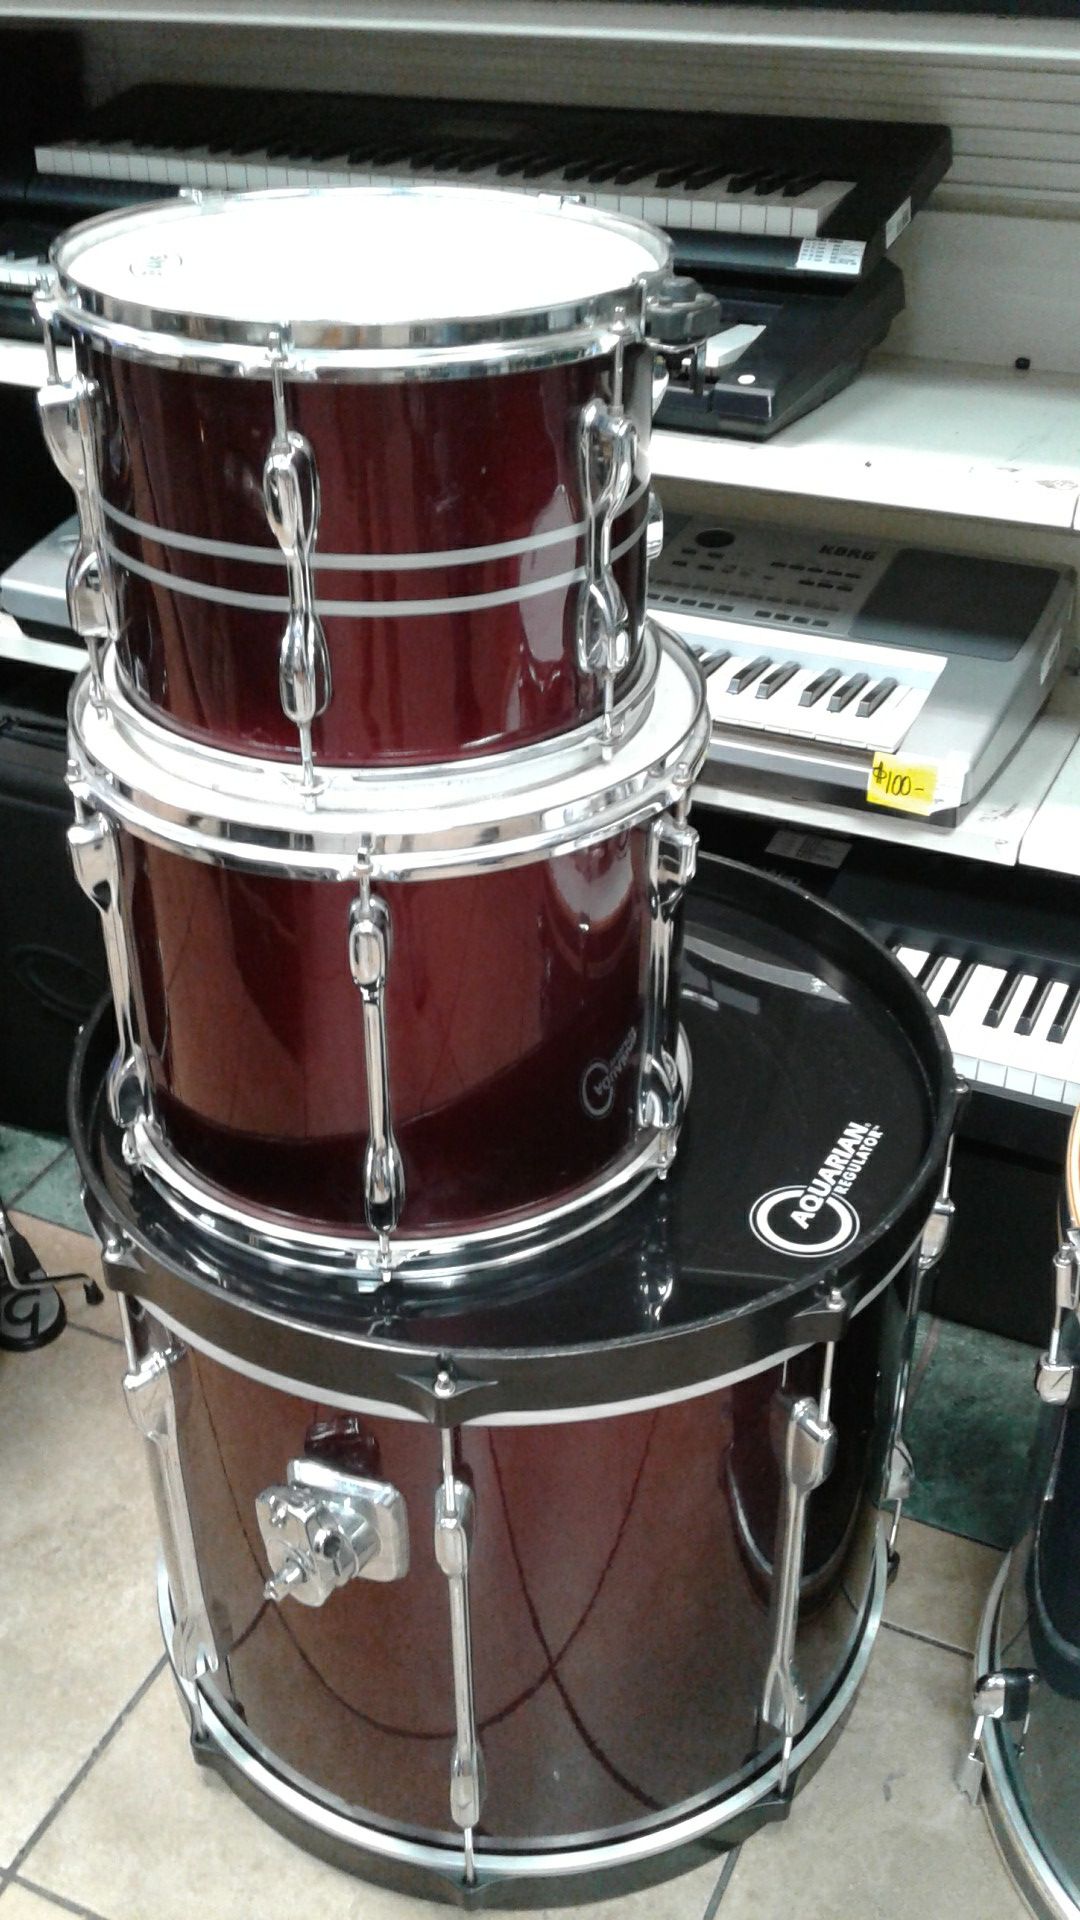 Tama 3 piece drum set